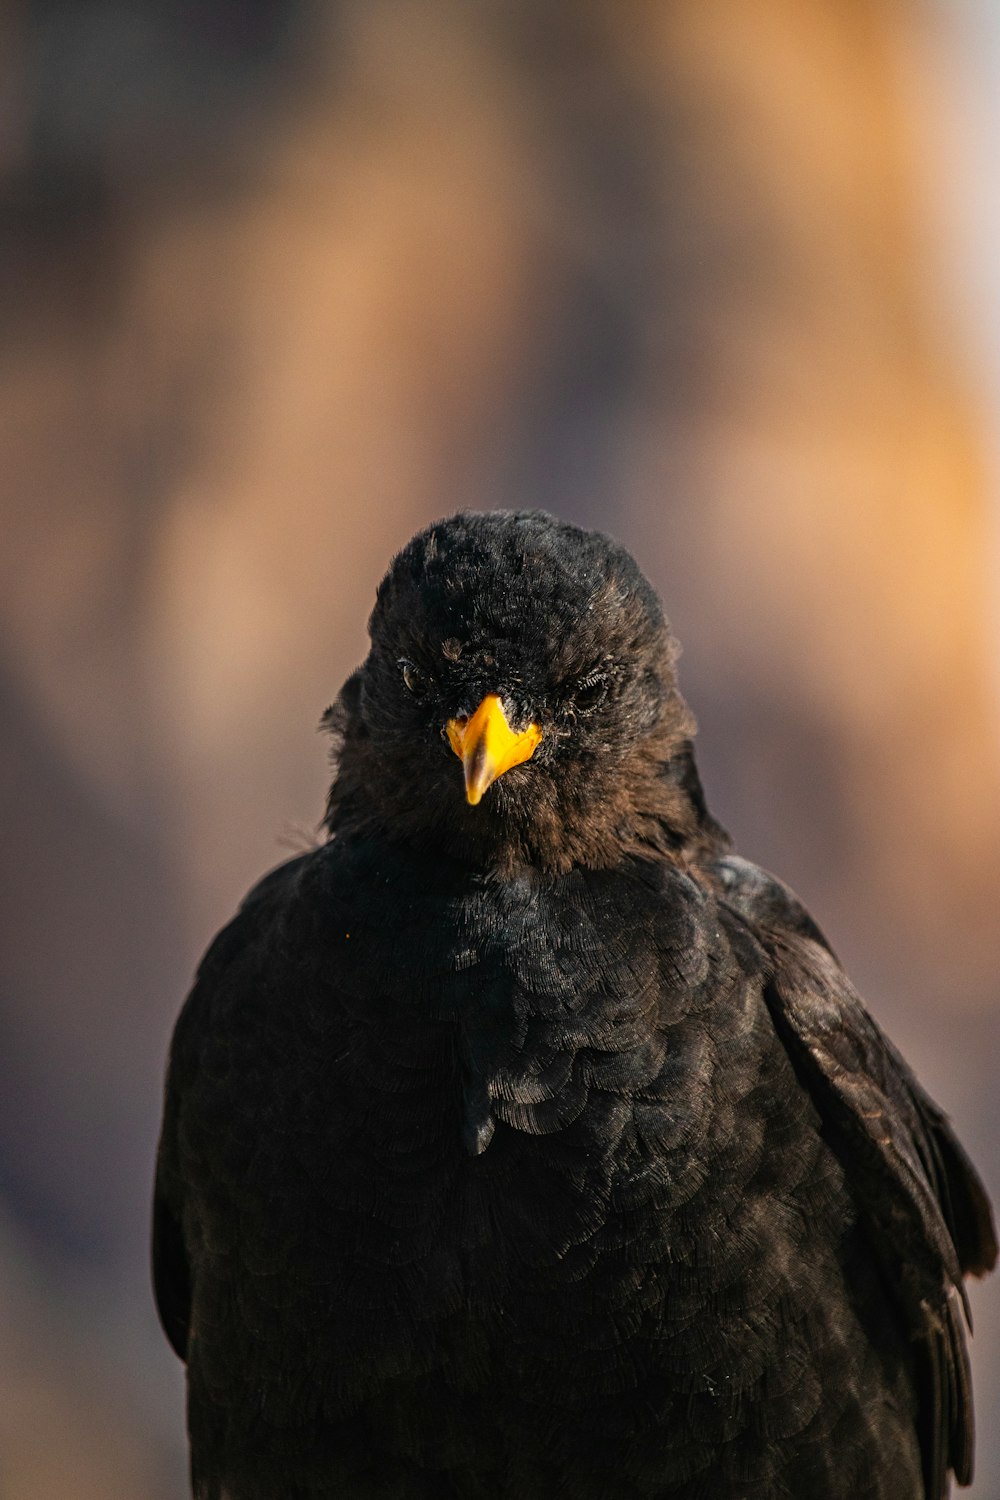 a close up of a black bird with a yellow beak